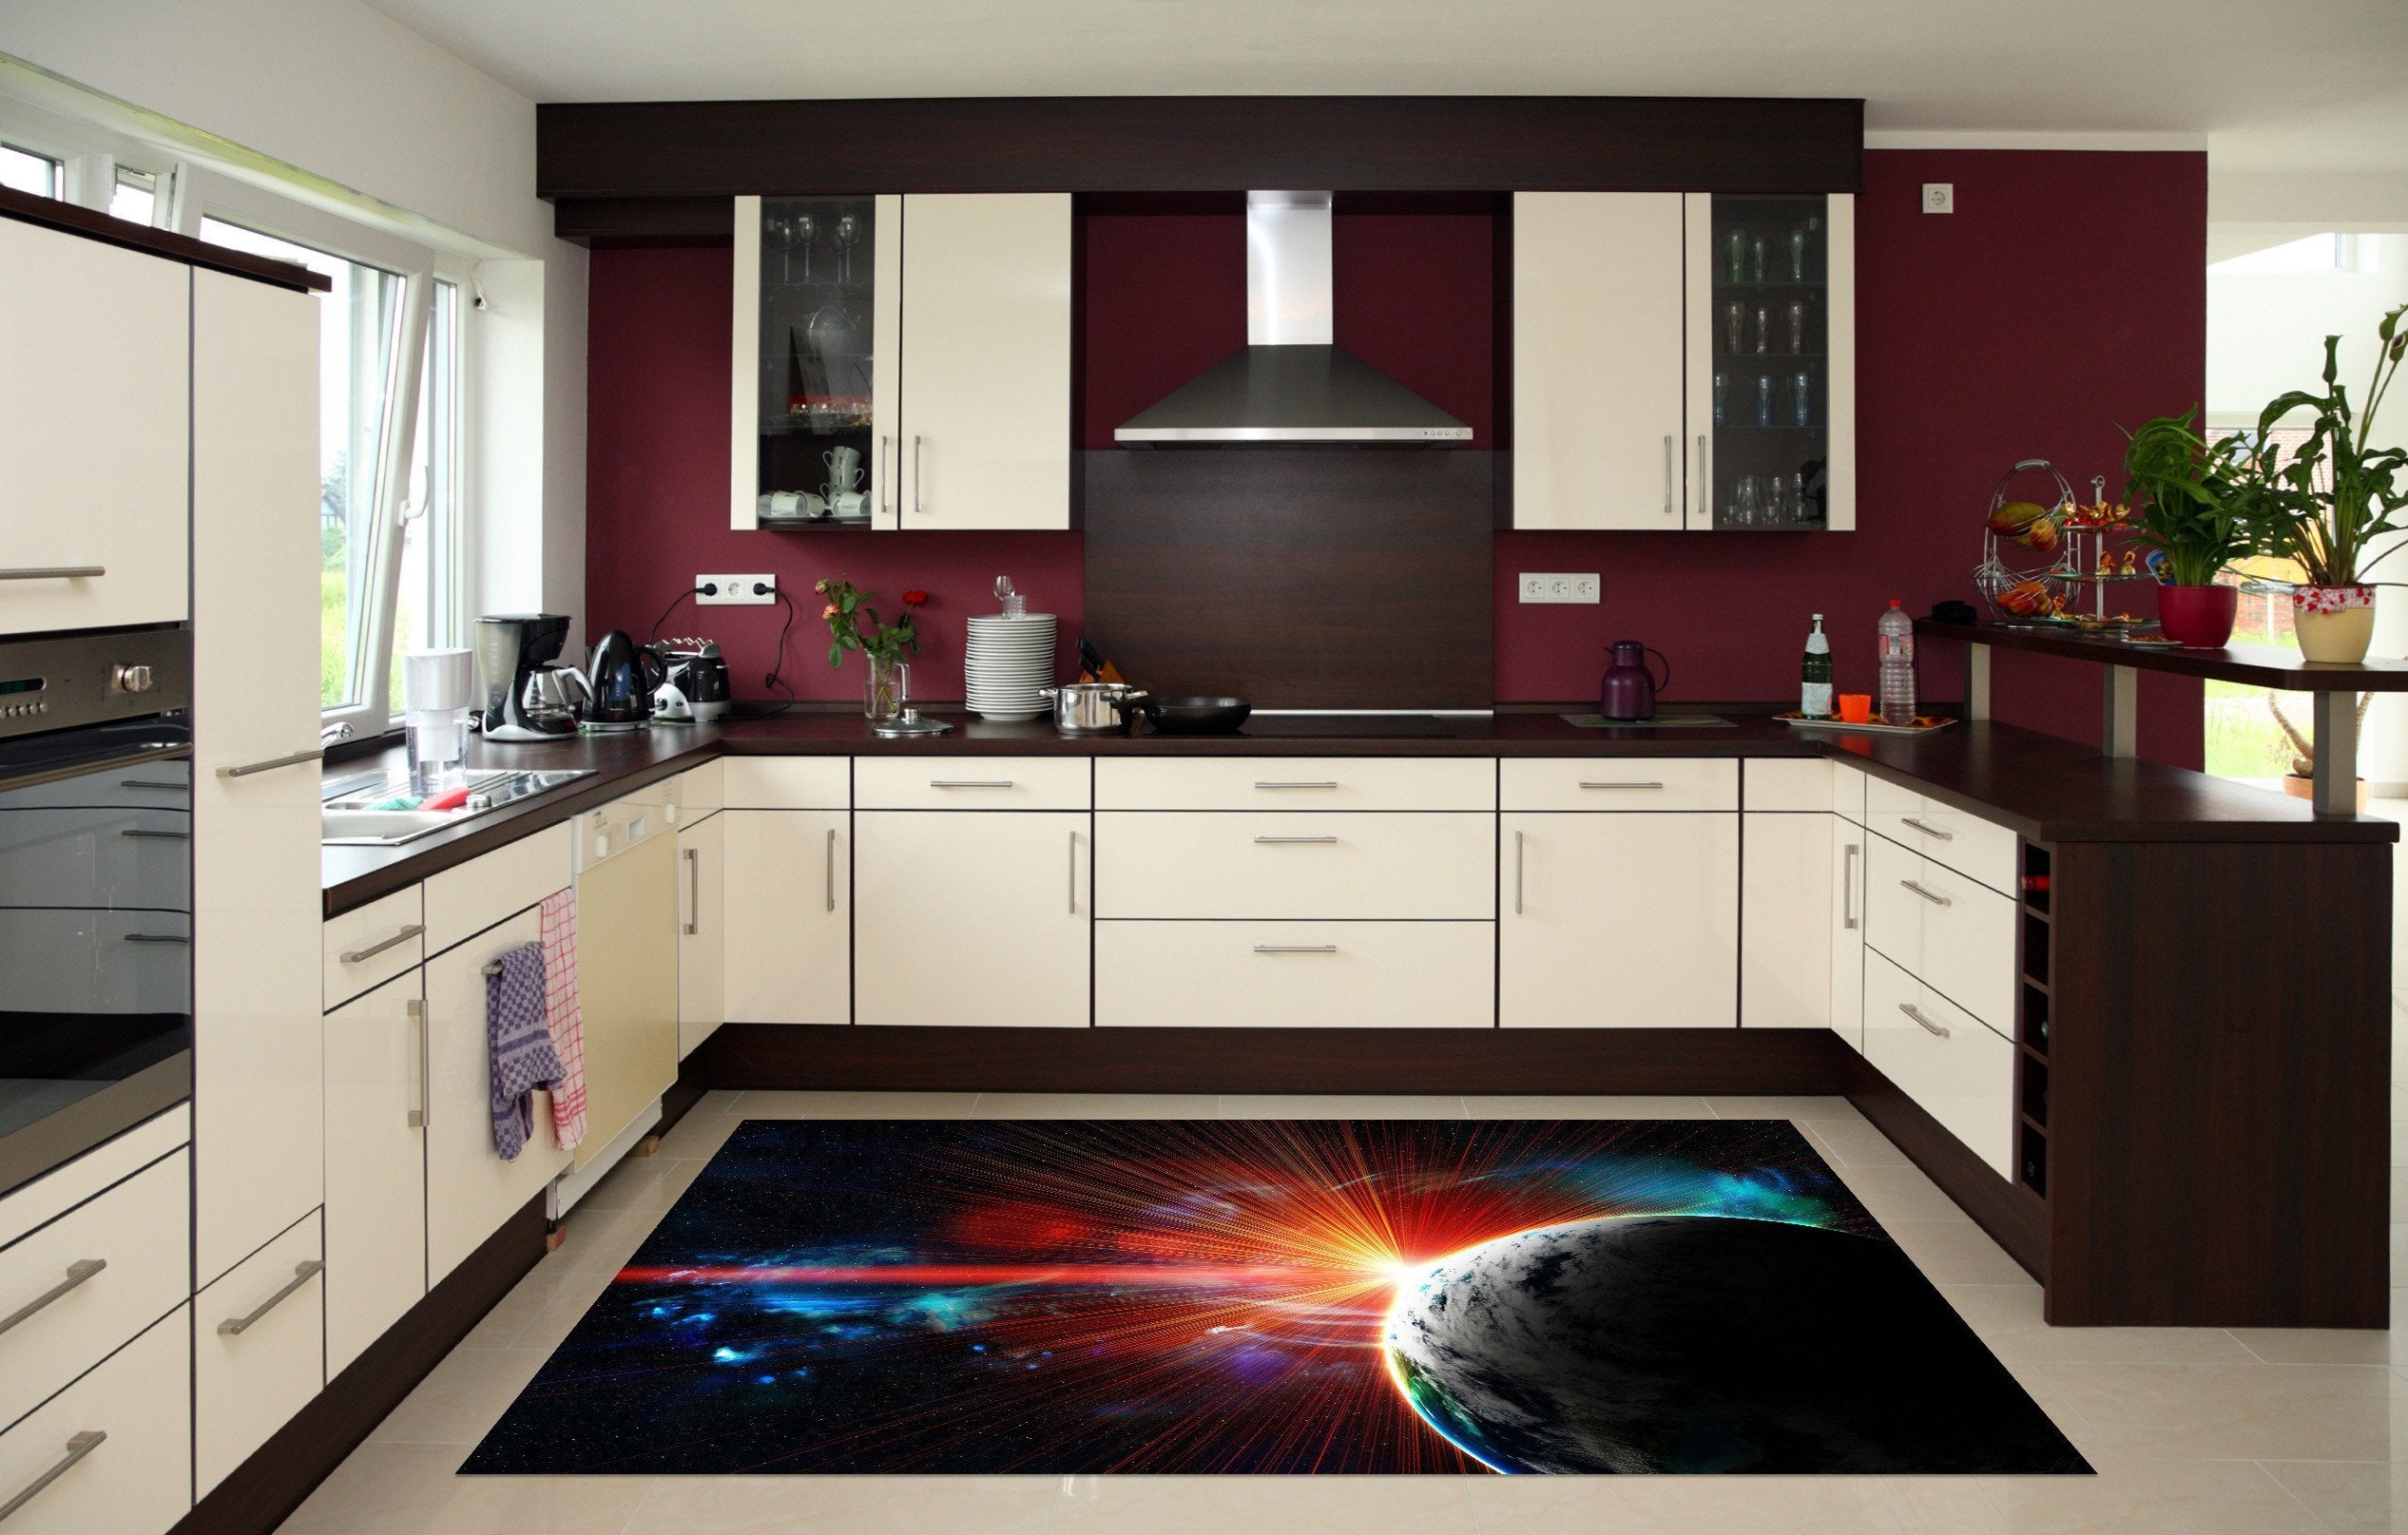 3D Space Planet Bright Sunshine 602 Kitchen Mat Floor Mural Wallpaper AJ Wallpaper 